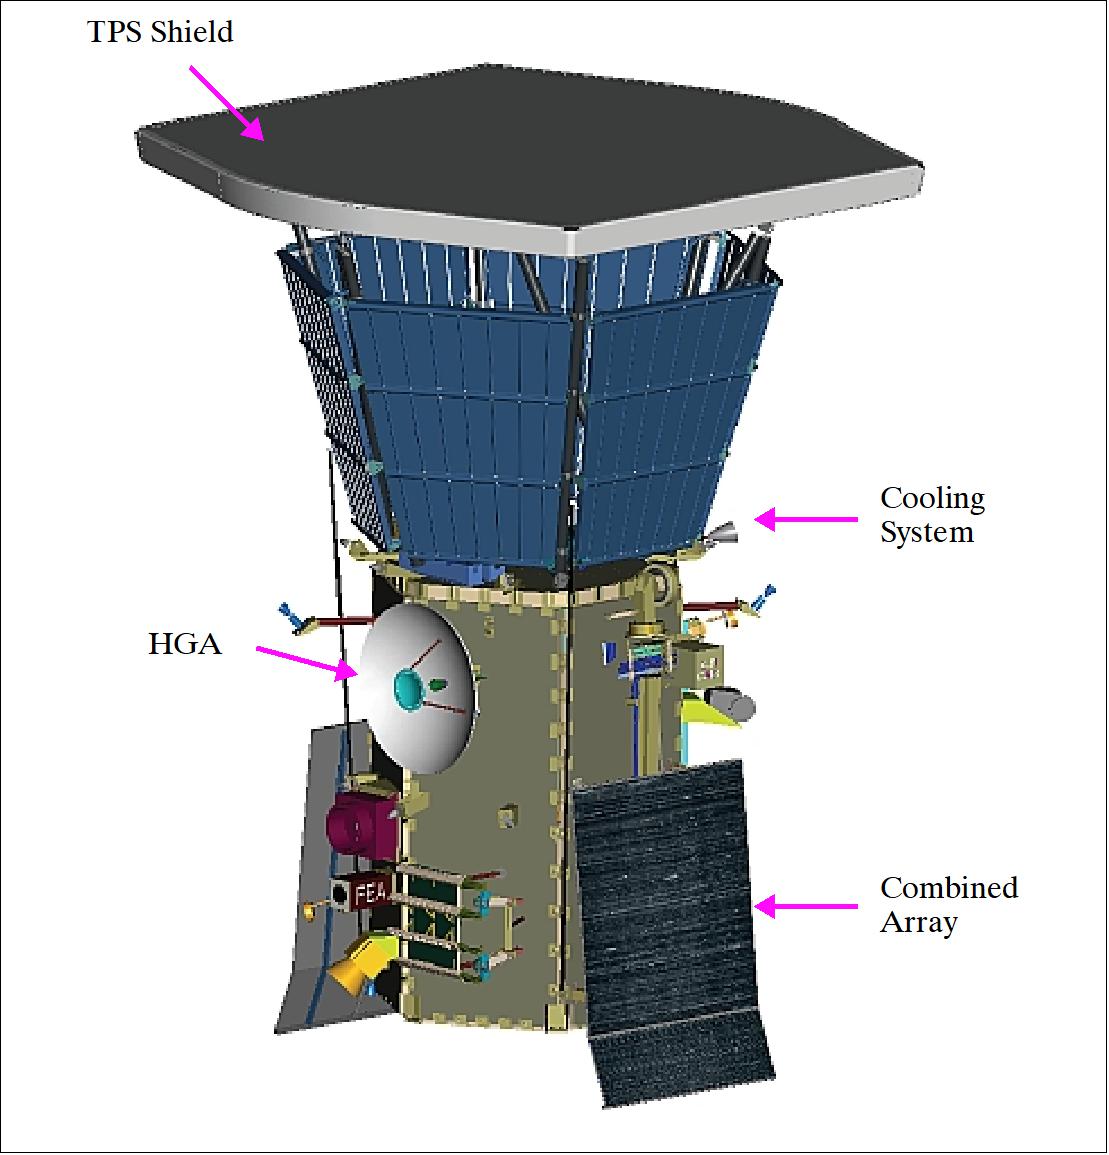 Figure 8: Illustration of the Solar Probe Plus spacecraft configuration (image credit: JHU/APL)